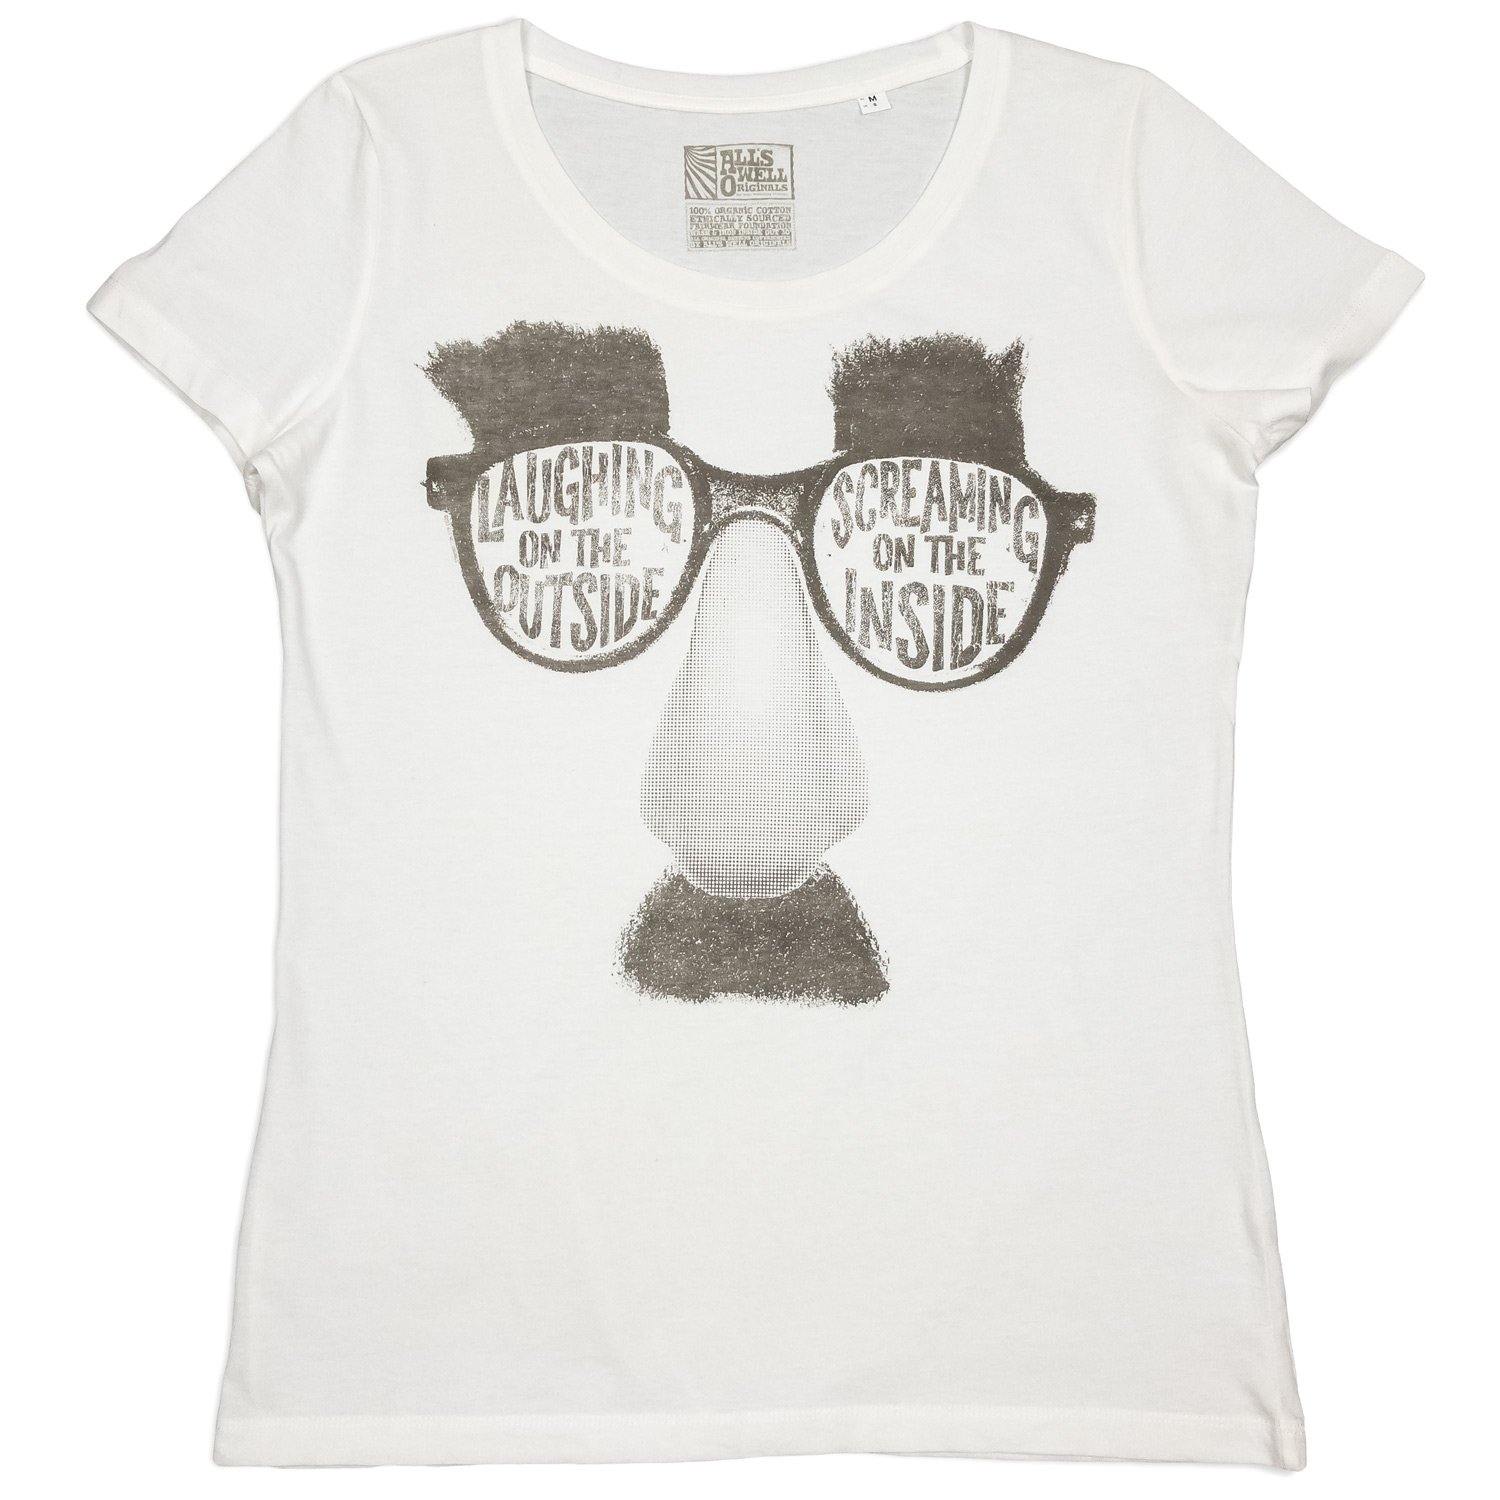 Groucho comedy t-shirt hand printed 100% organic cotton t-shirt